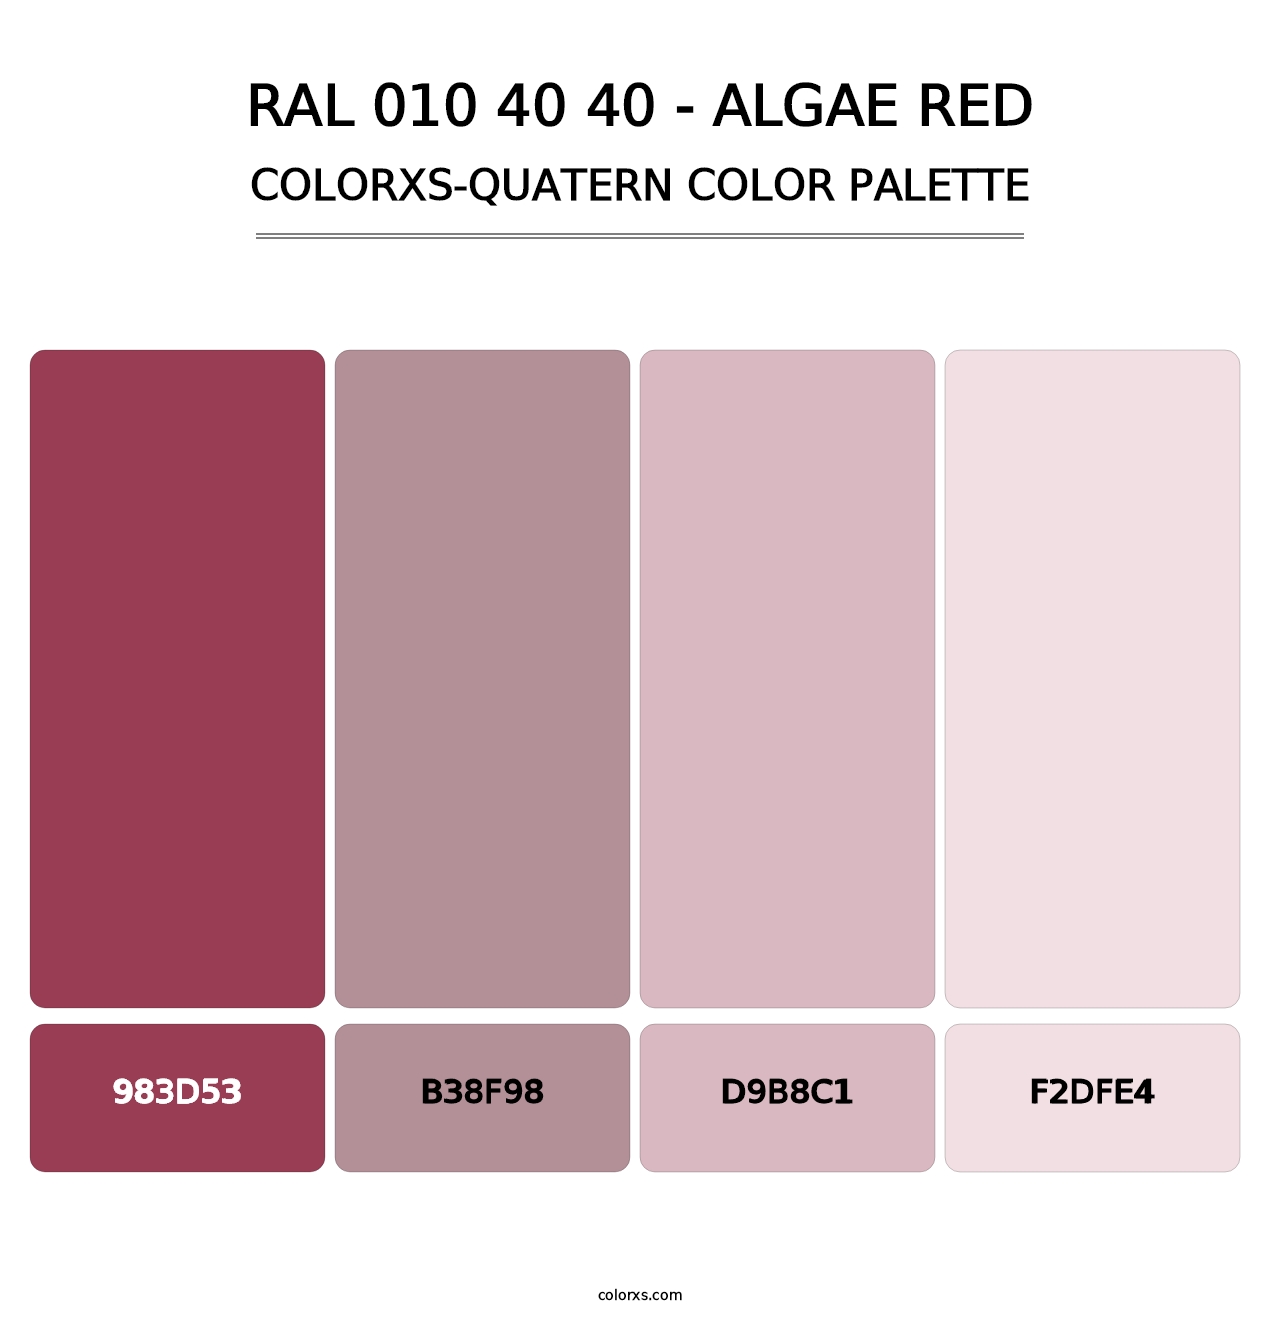 RAL 010 40 40 - Algae Red - Colorxs Quatern Palette